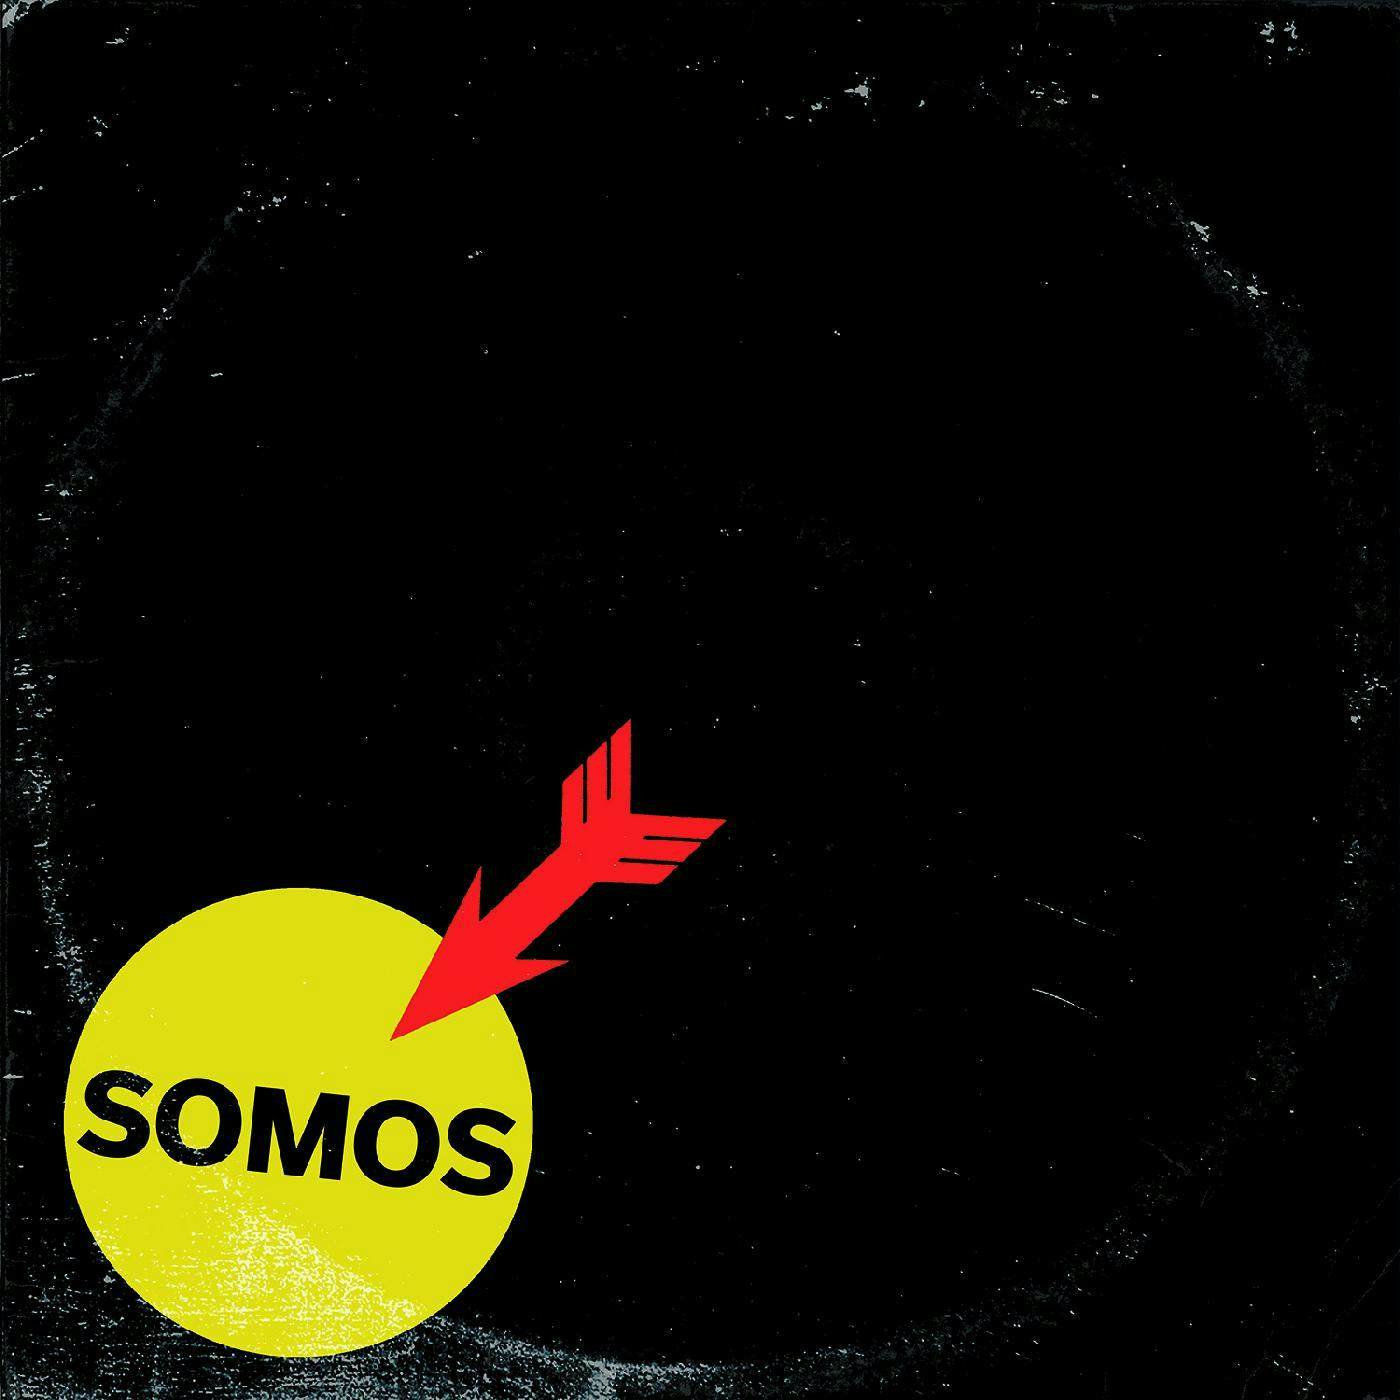 Somos Prison on a Hill Vinyl Record